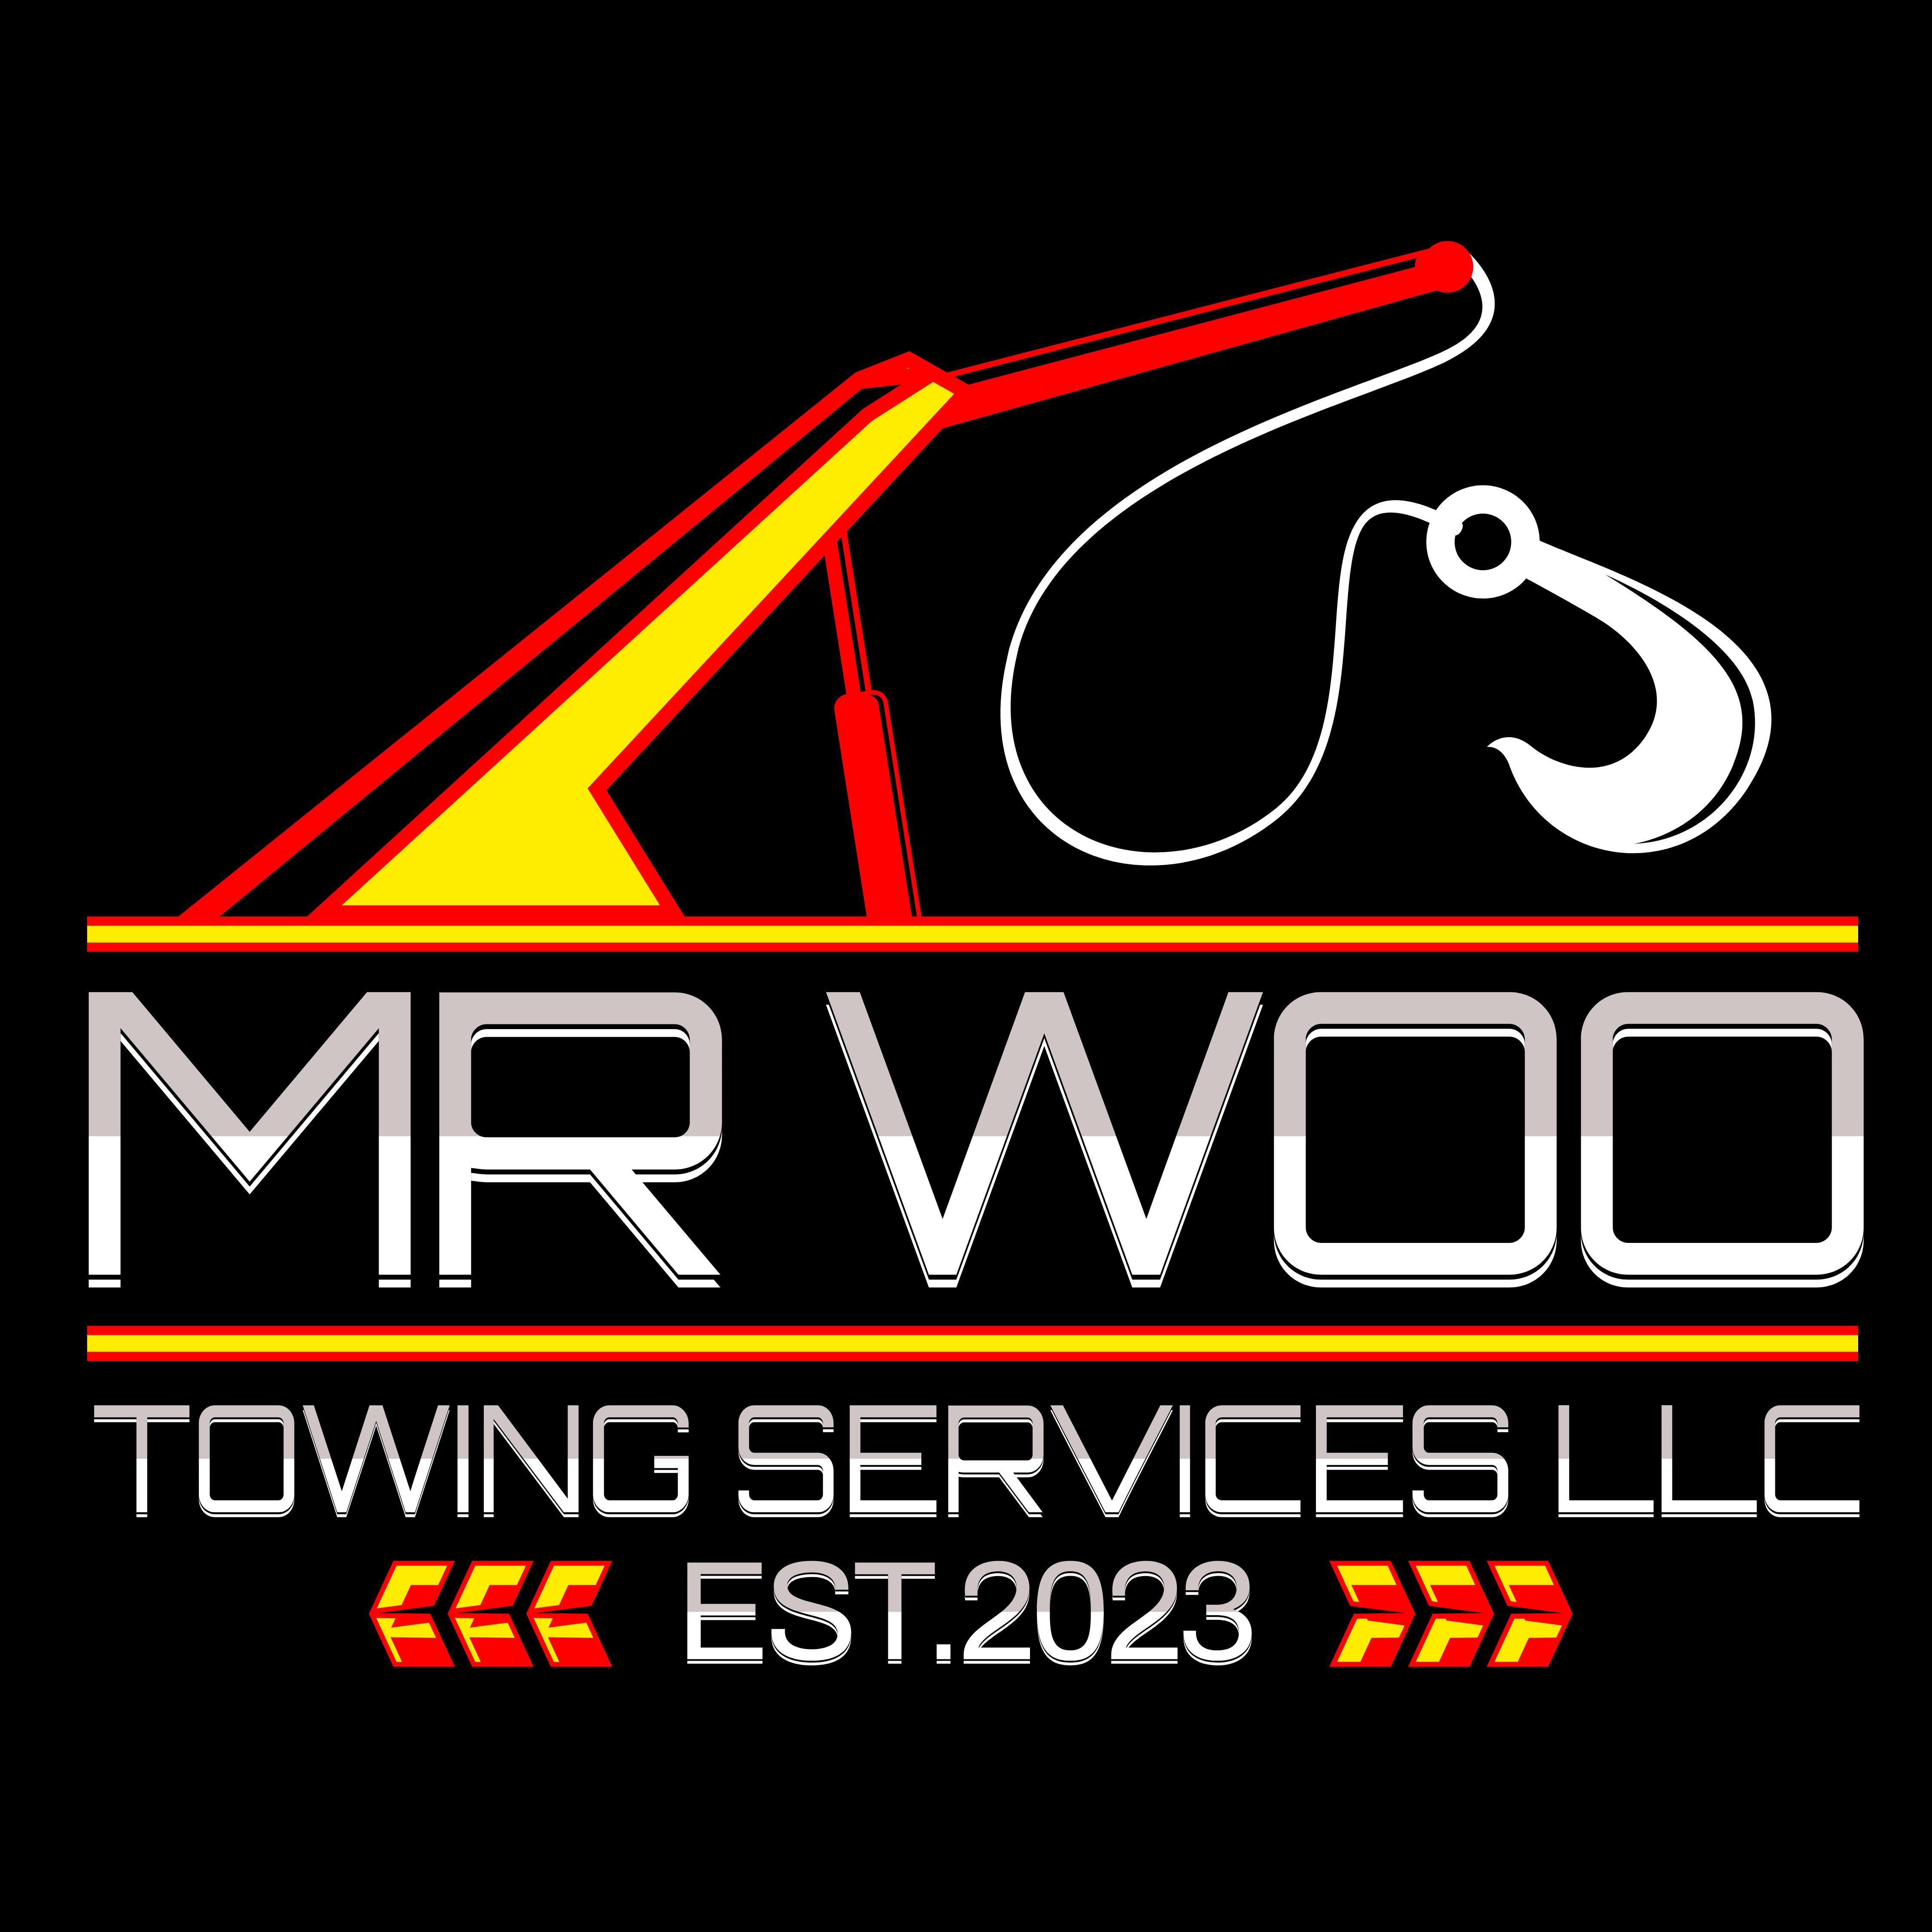 Mr. Woo Towing Service LLC - Homestead, FL - (305)849-1728 | ShowMeLocal.com